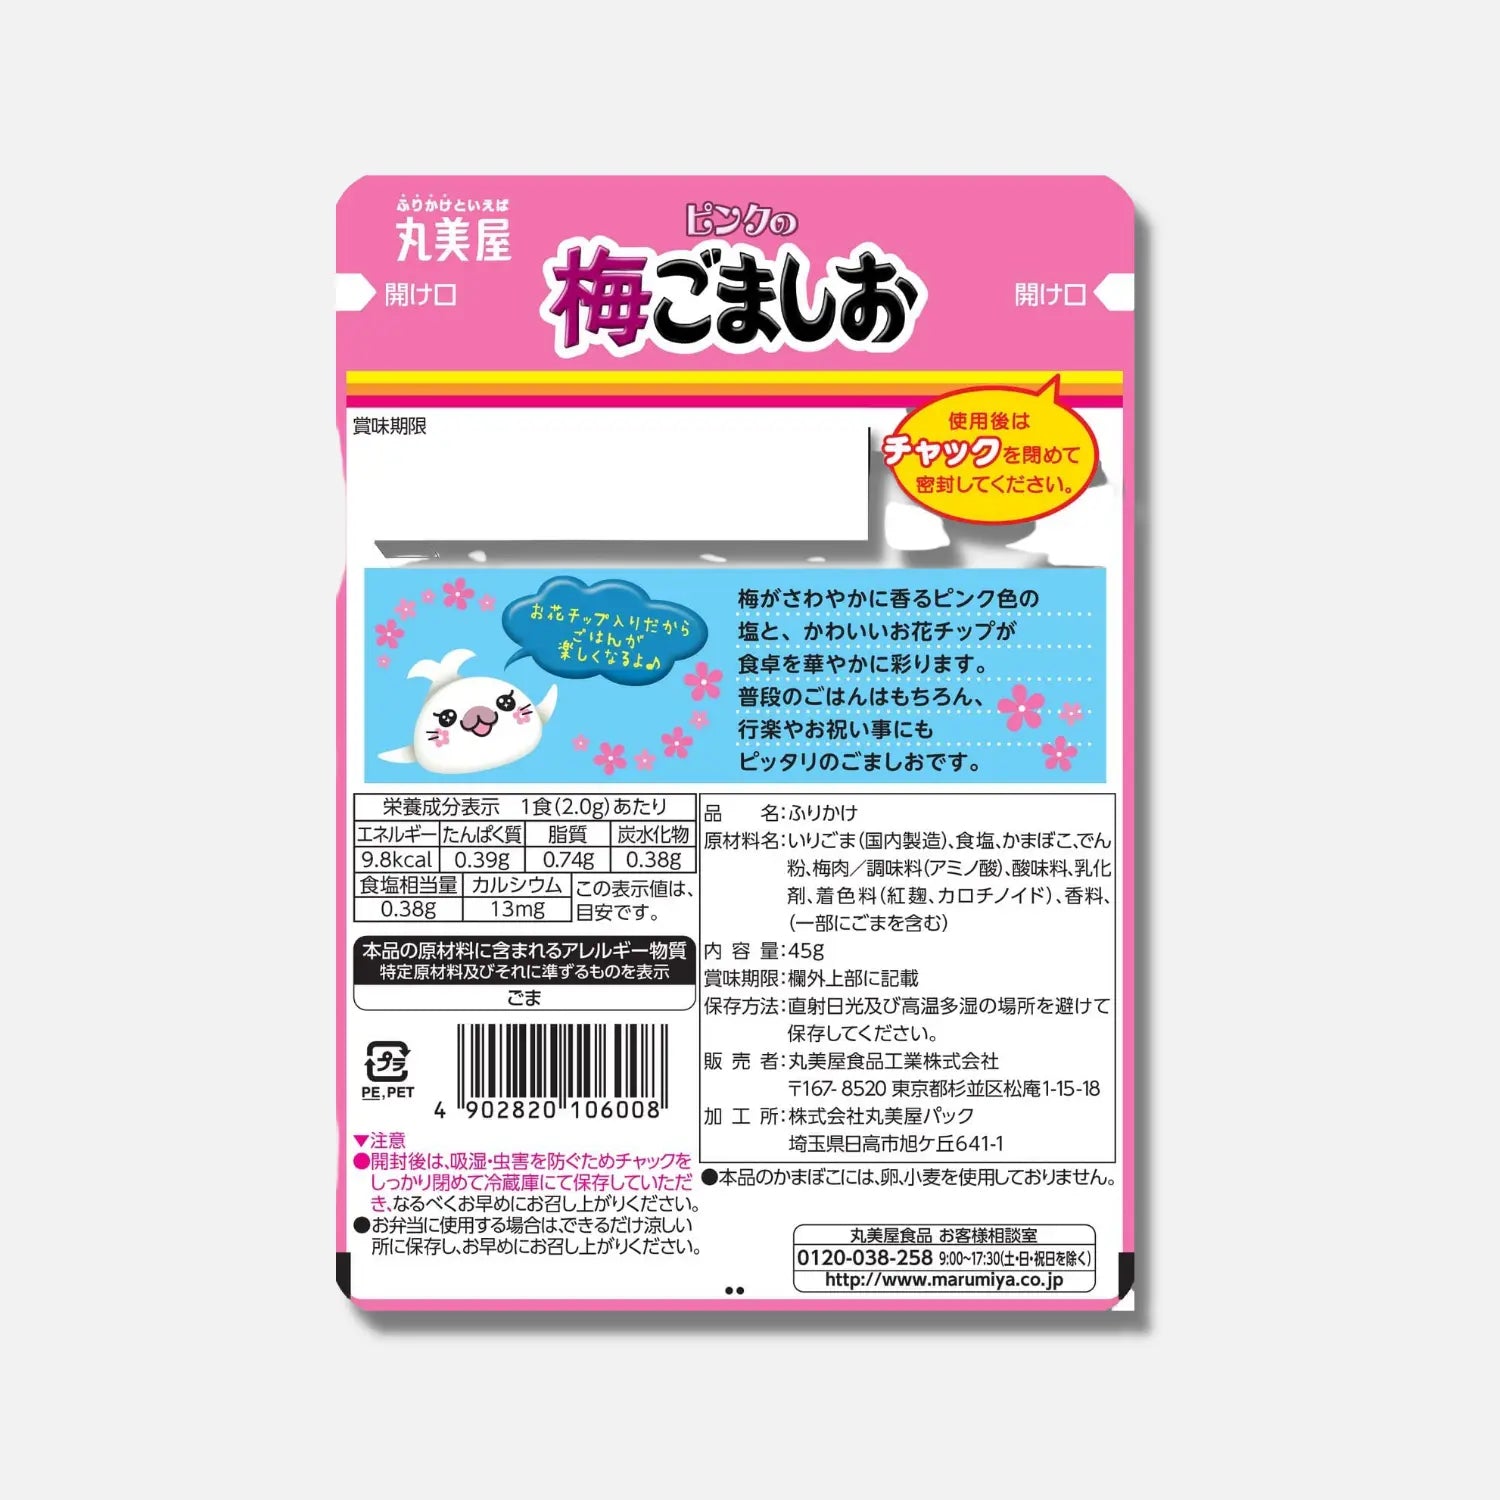 Marumiya Furikake Salted Ume & Goma 45g - Buy Me Japan